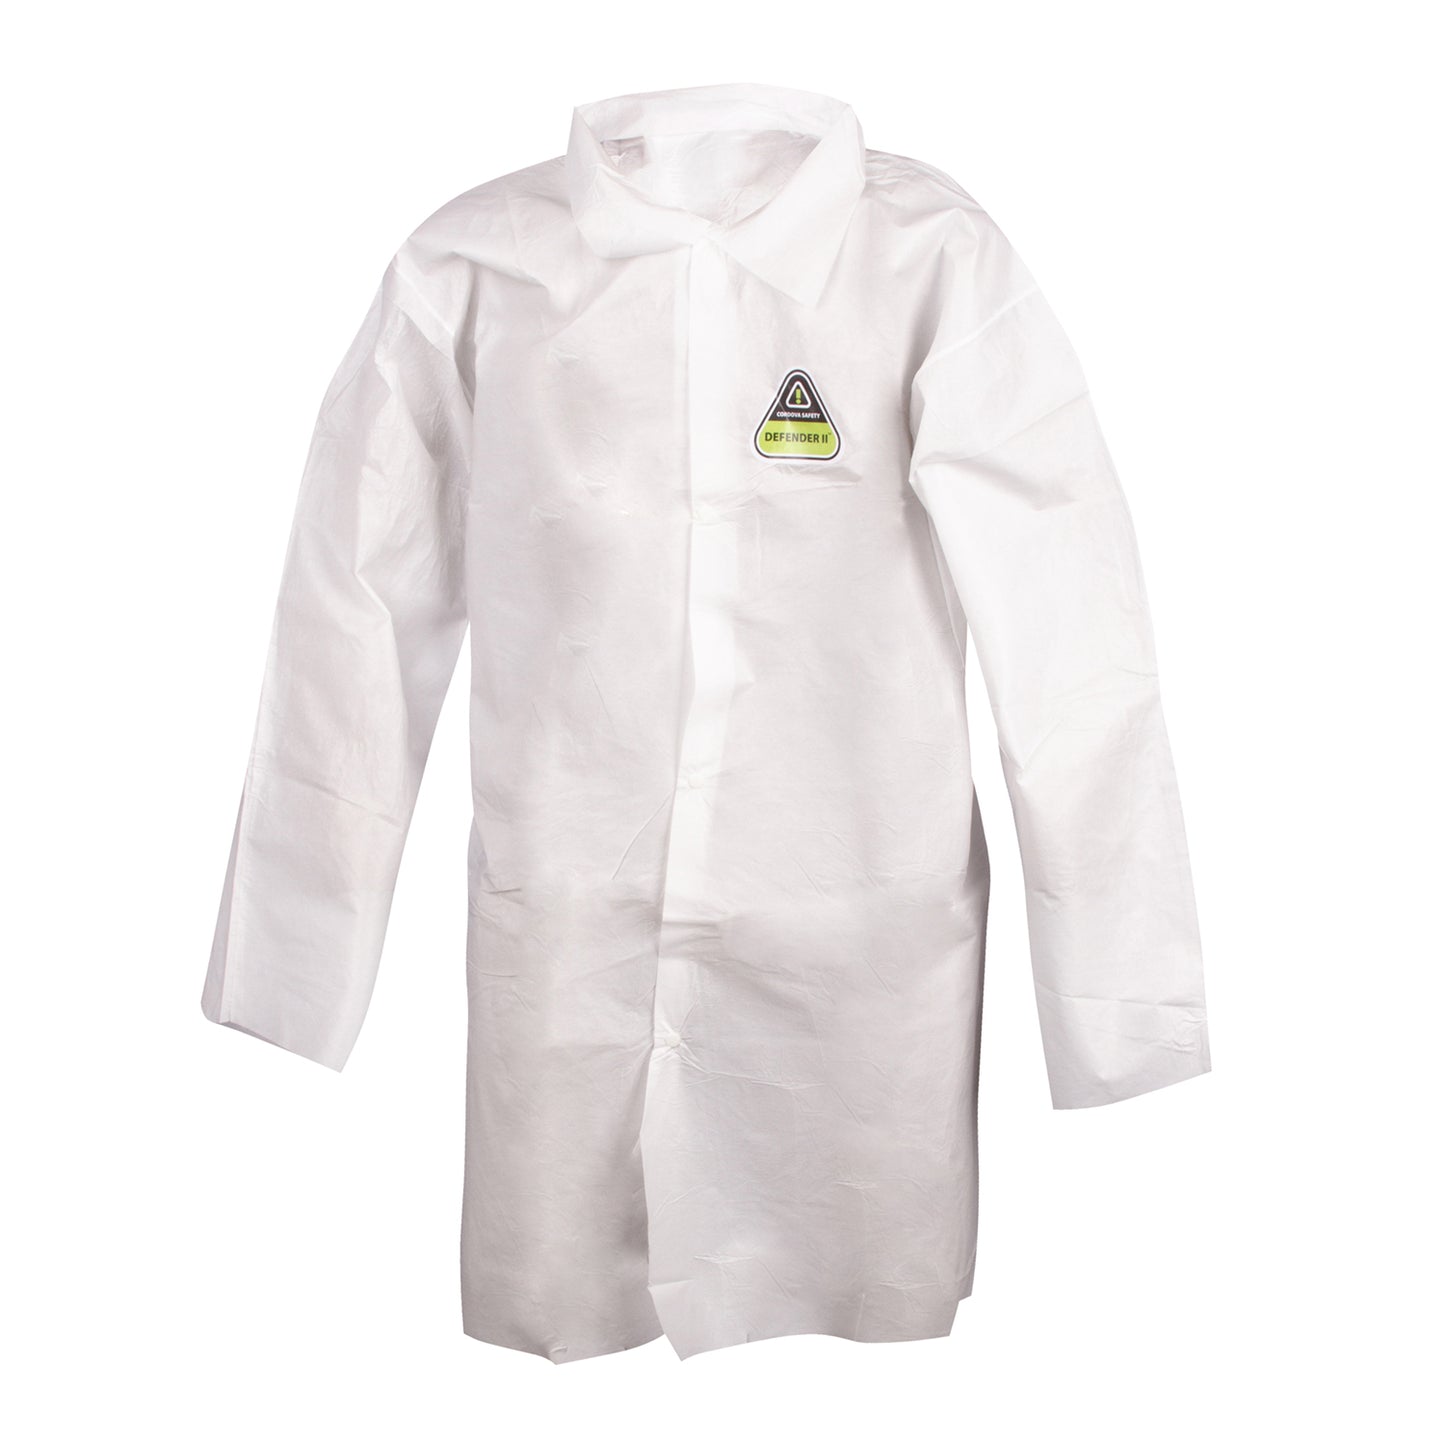 Cordova MPLAB100 White Disposable Lab Coats, Bulk 30-Pack